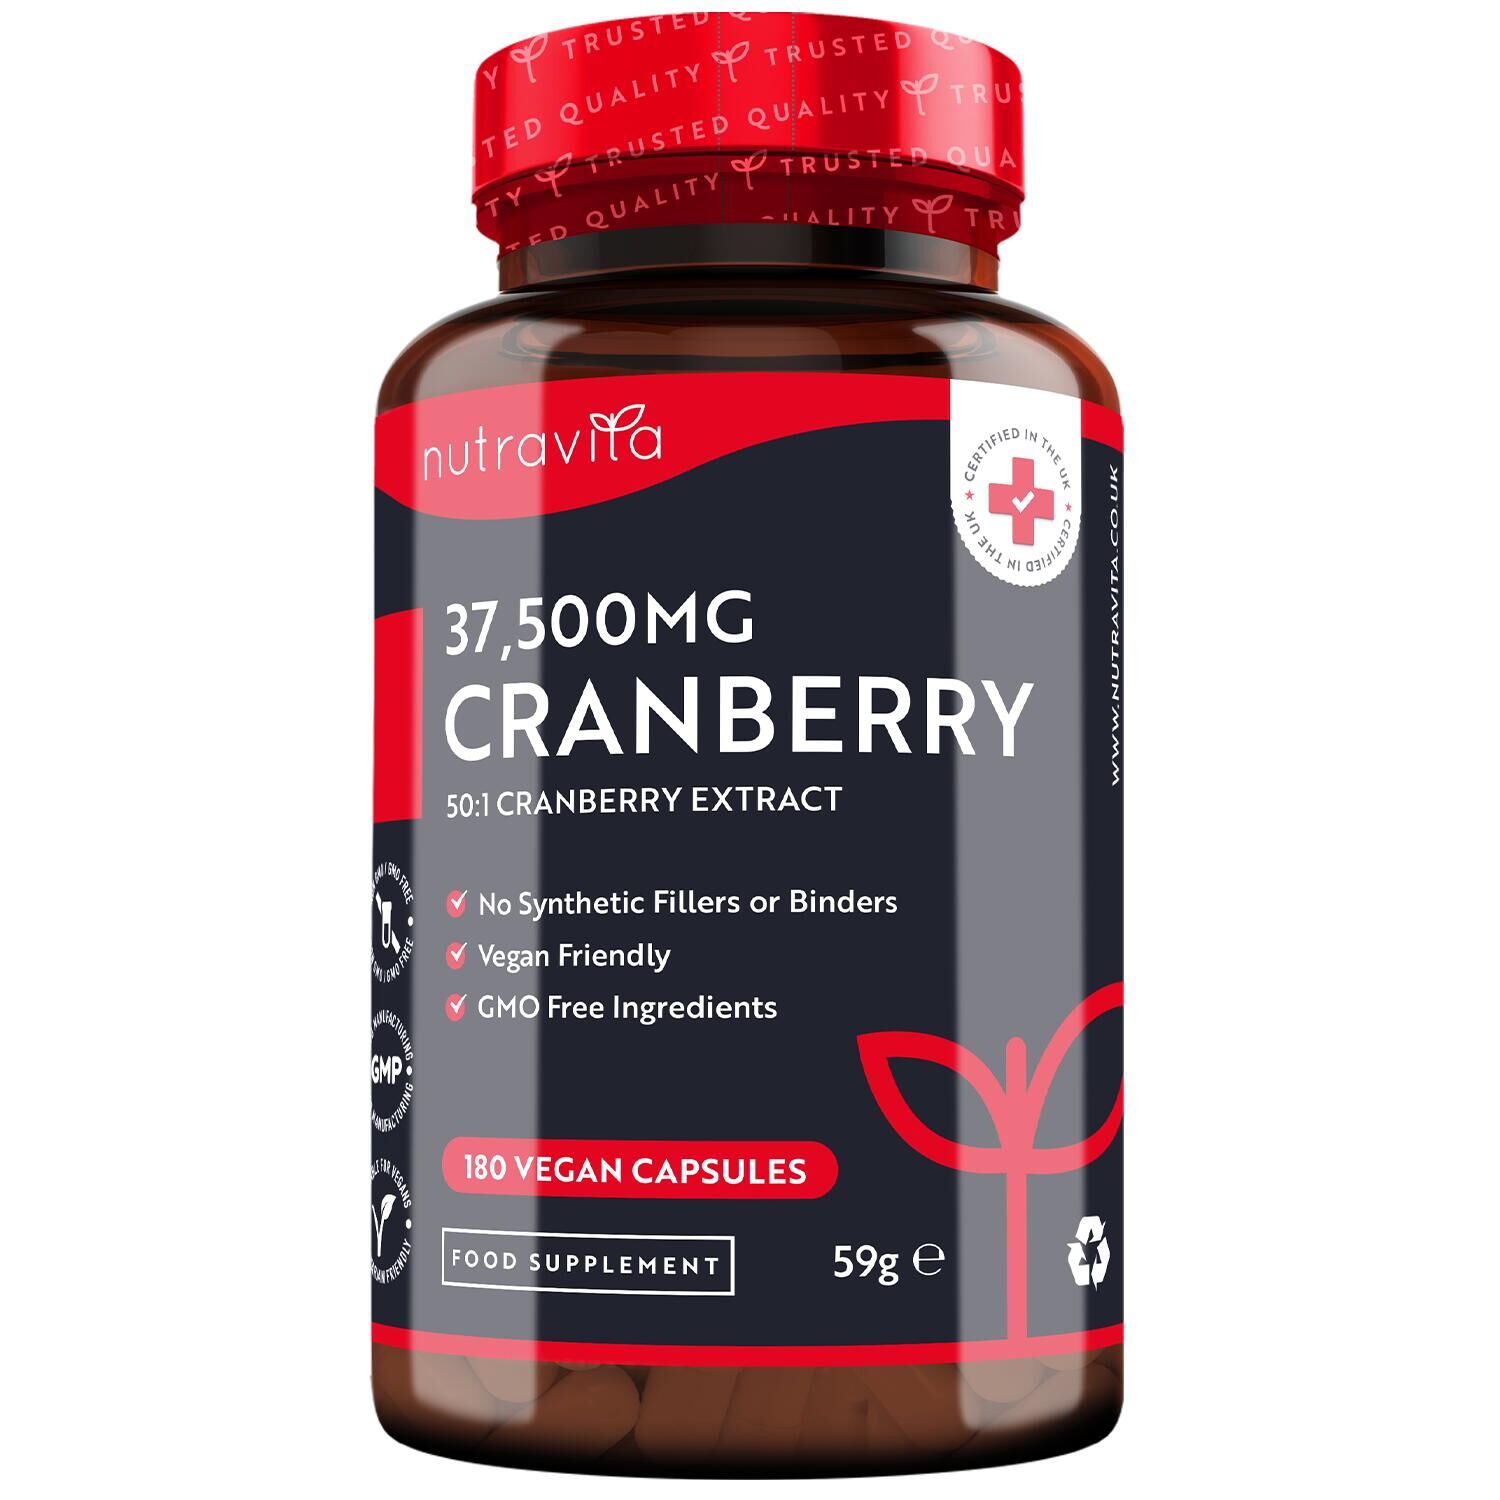 NUTRAVITA Nutravita Cranberry 50:1 Extract 37,500mg - 180 Vegan Capsules